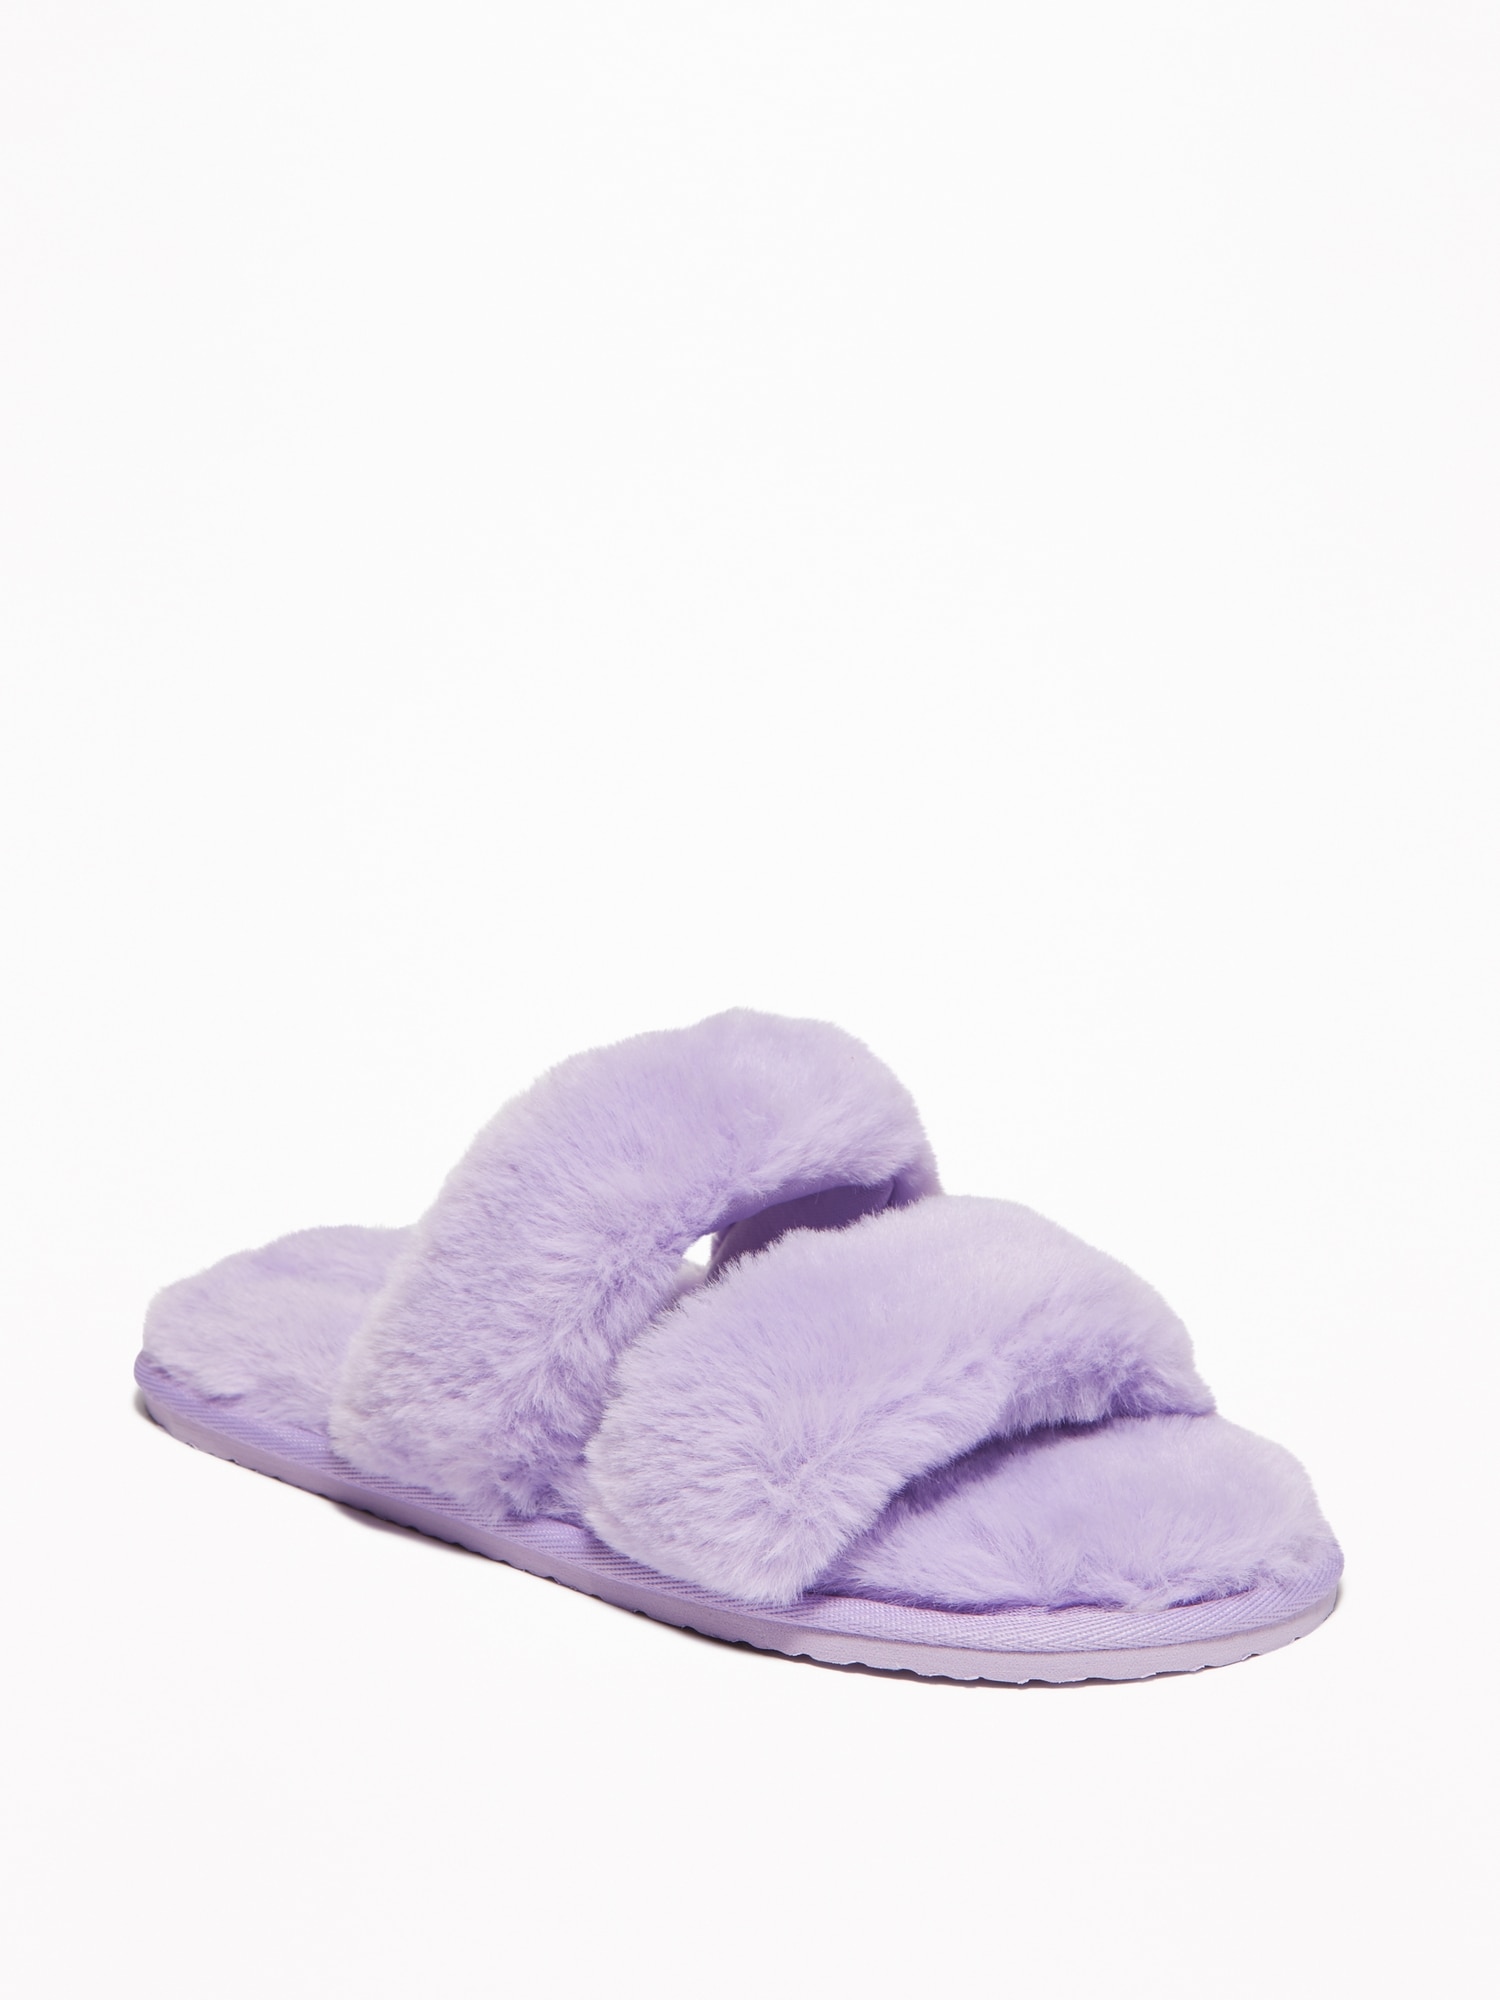 Faux-Fur Slide Slippers for Girls | Old Navy